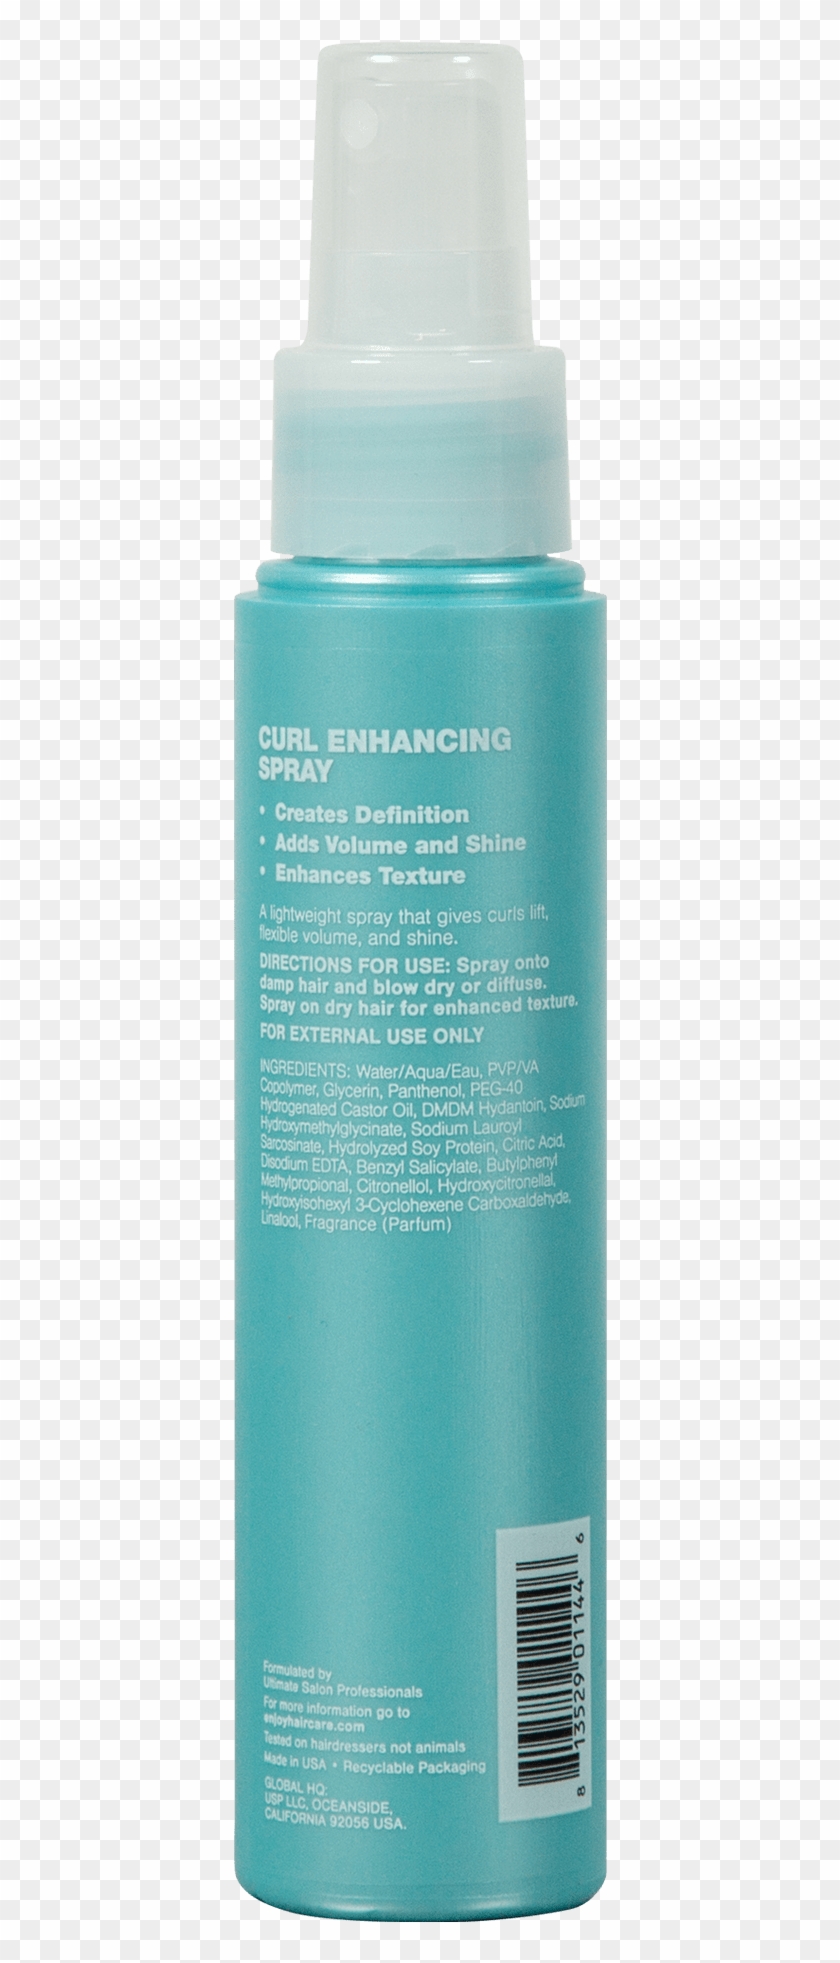 Curl Enhancing Spray - Cosmetics Clipart #1757453